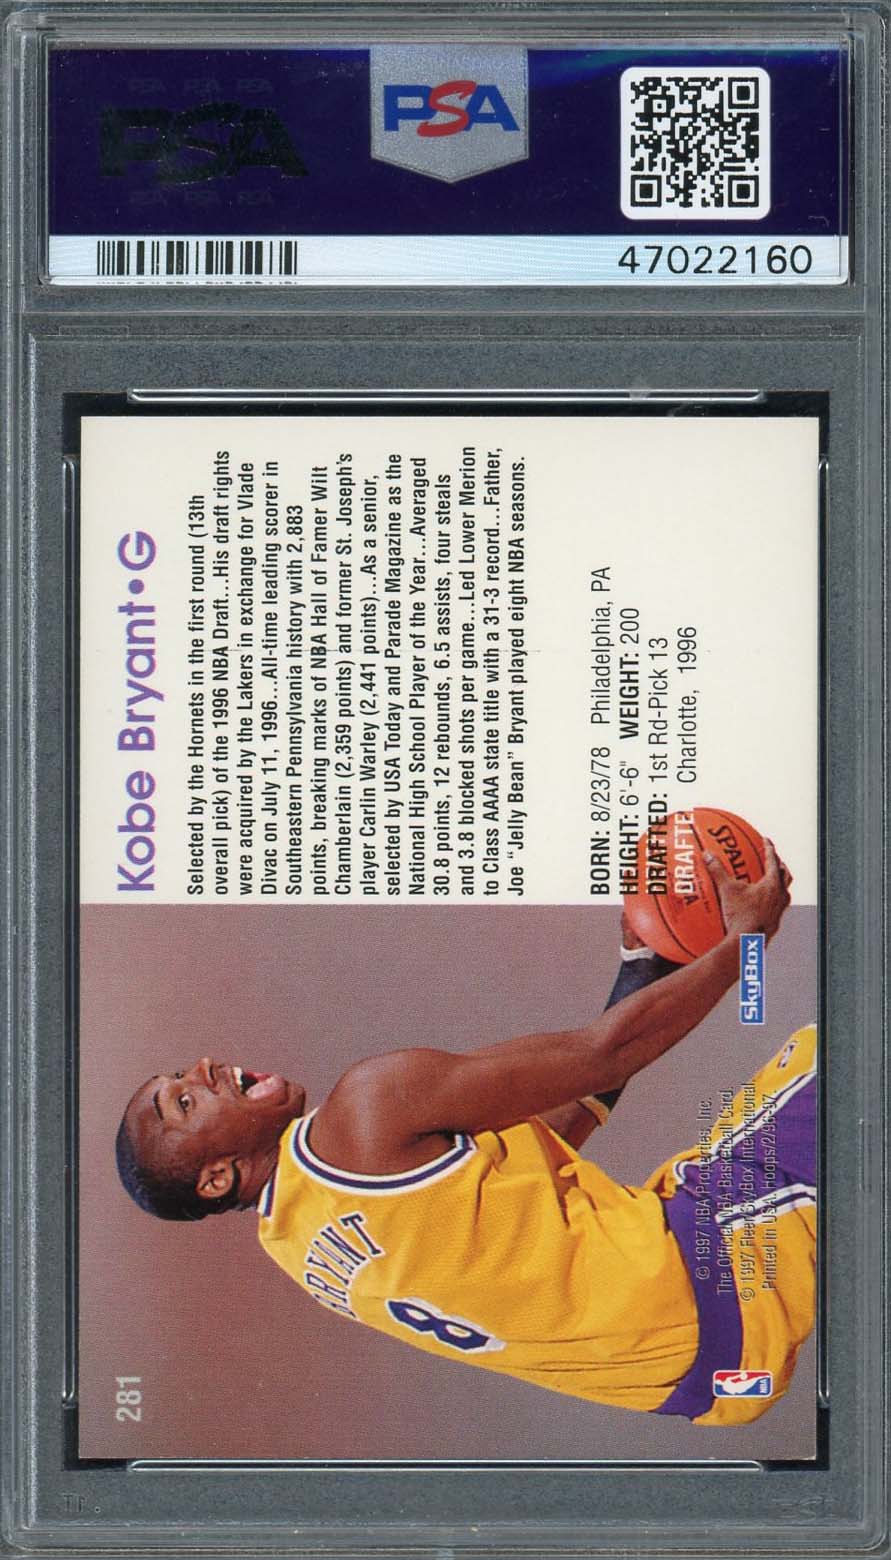 Kobe Bryant 1996 Hoops Rookie Basketball Card RC #281 Graded PSA 8-Powers Sports Memorabilia